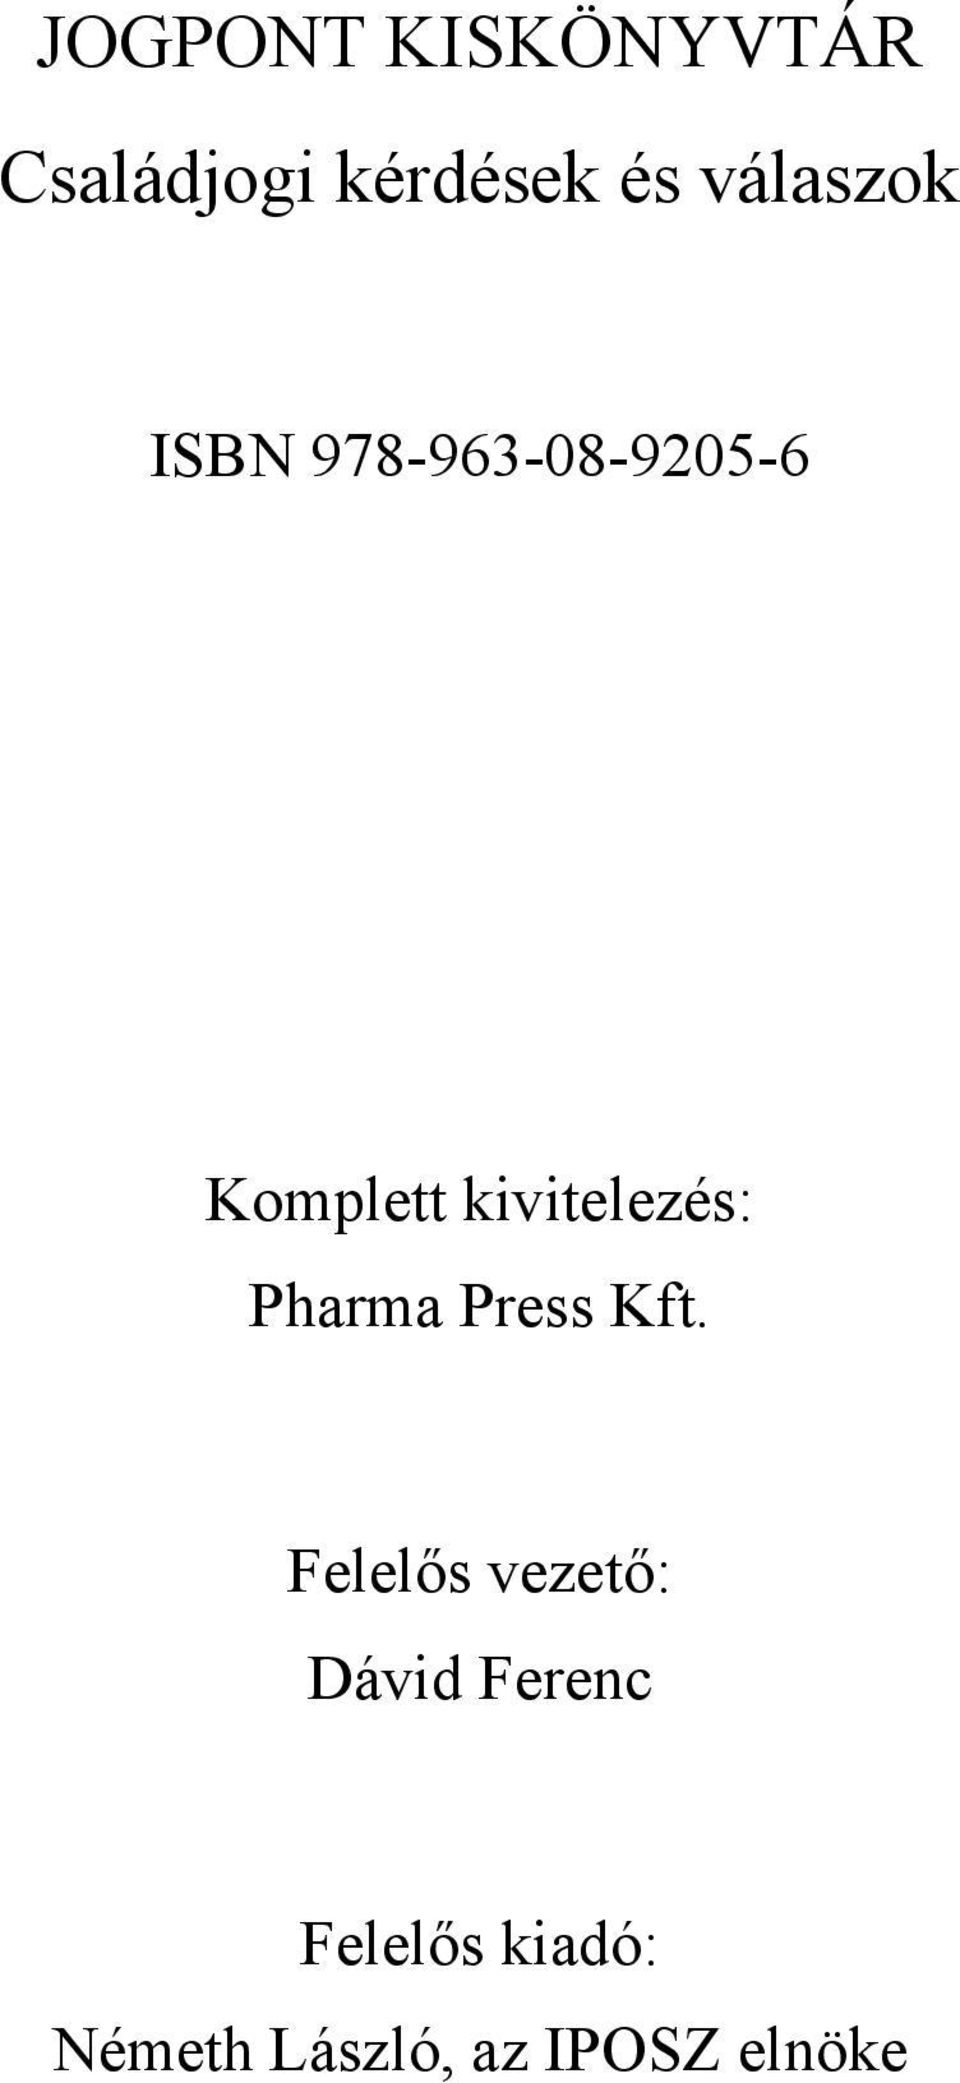 kivitelezés: Pharma Press Kft.